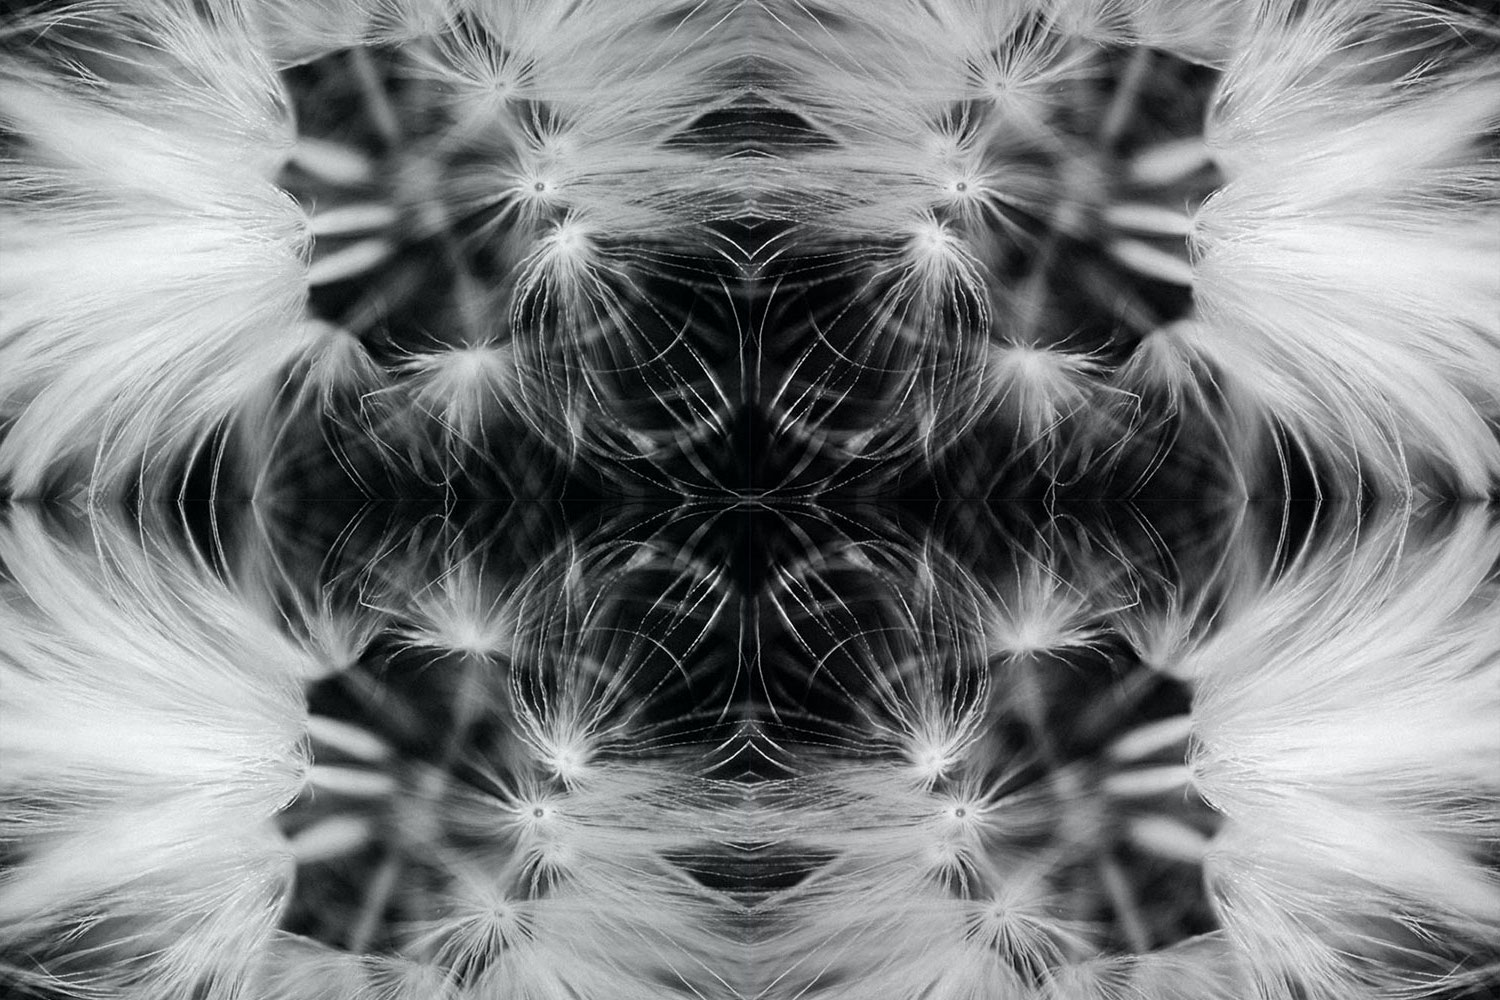 Kaleidoscope black and white artwork using a dandelion seed